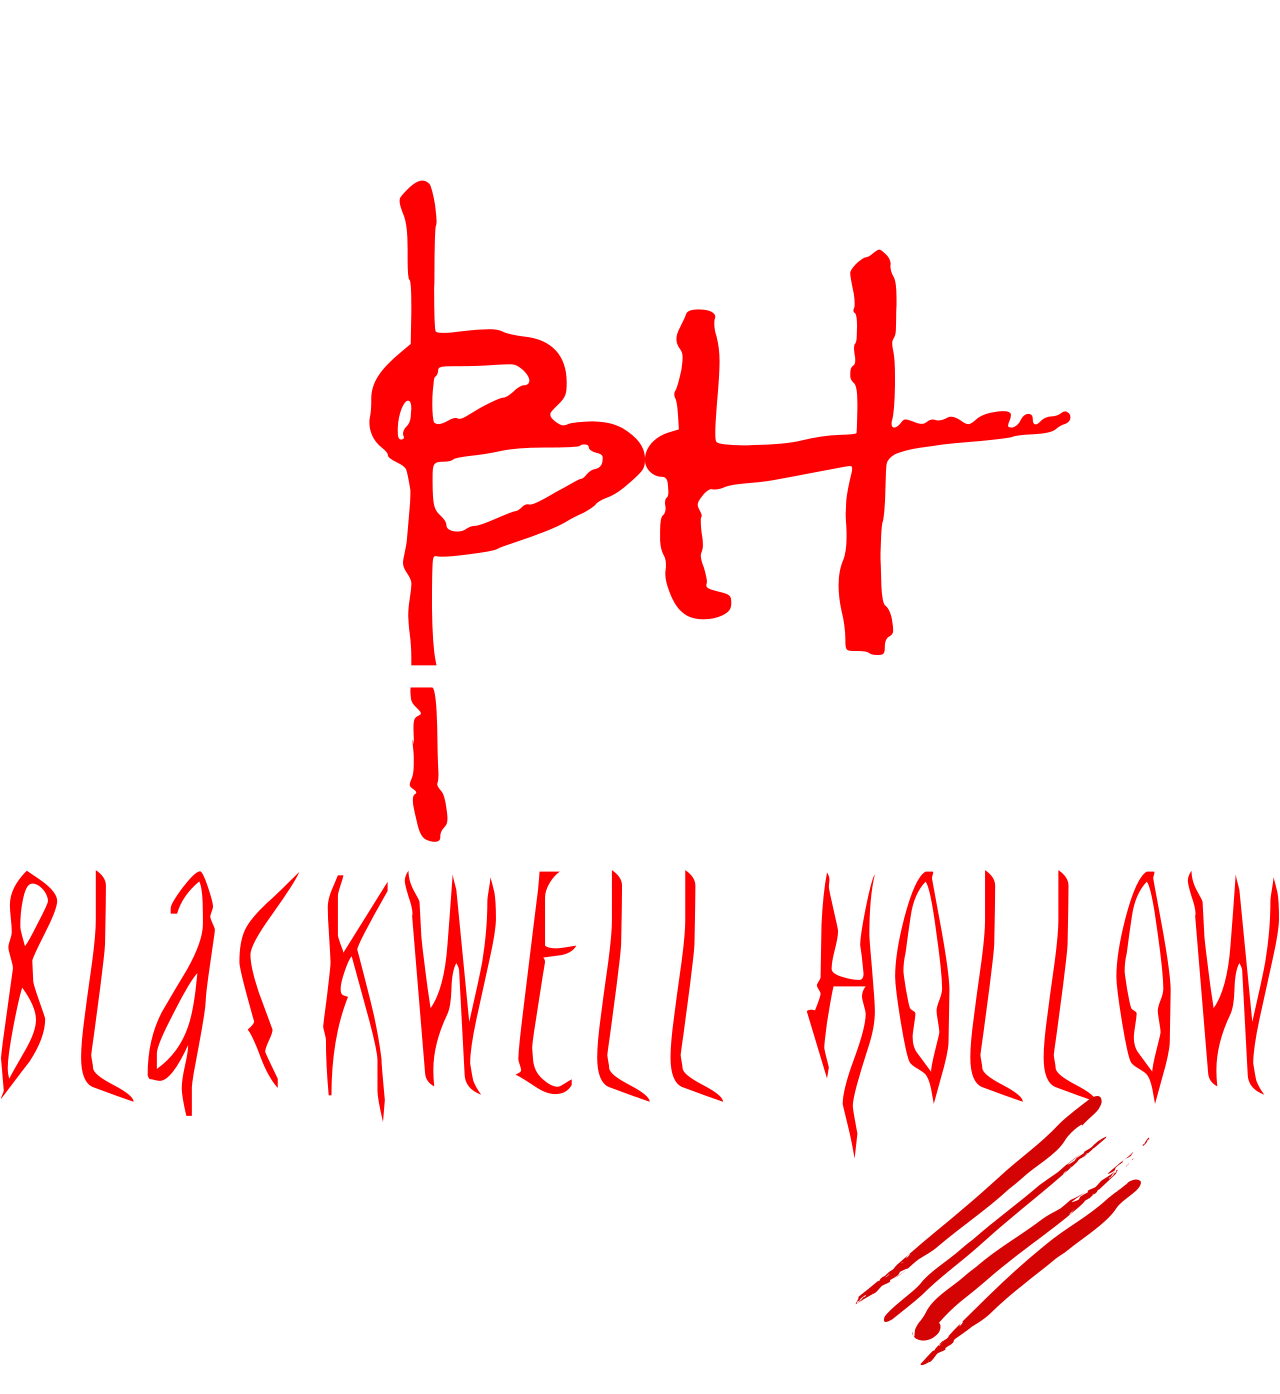 Blackwell Hollow's logo